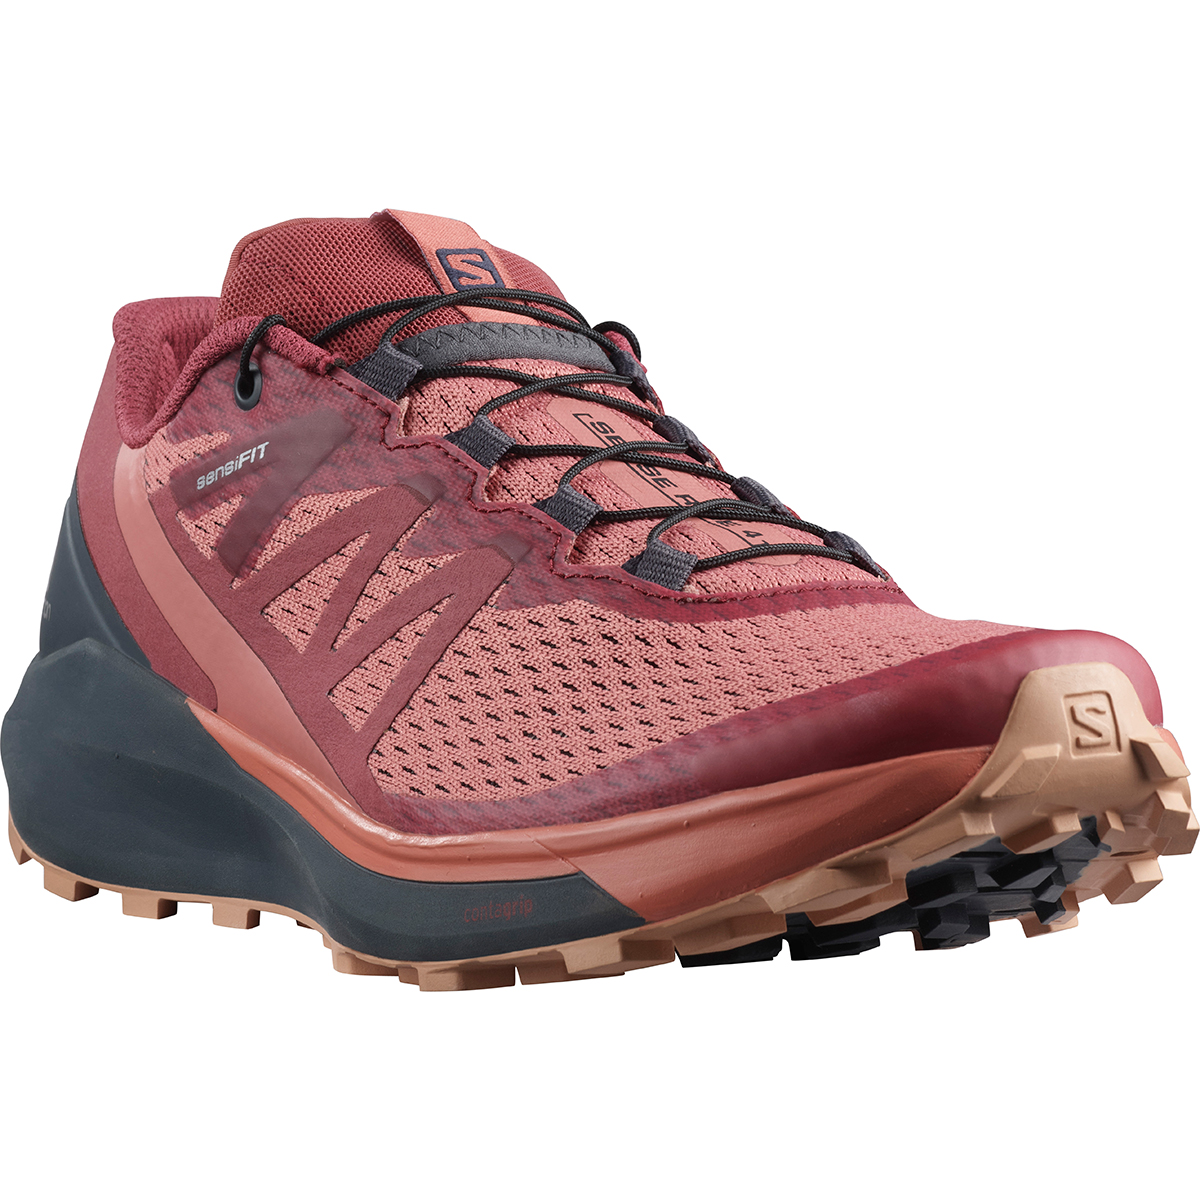 Salomon Women's Sense Ride 4 Trail Running Shoes - Size 10.5